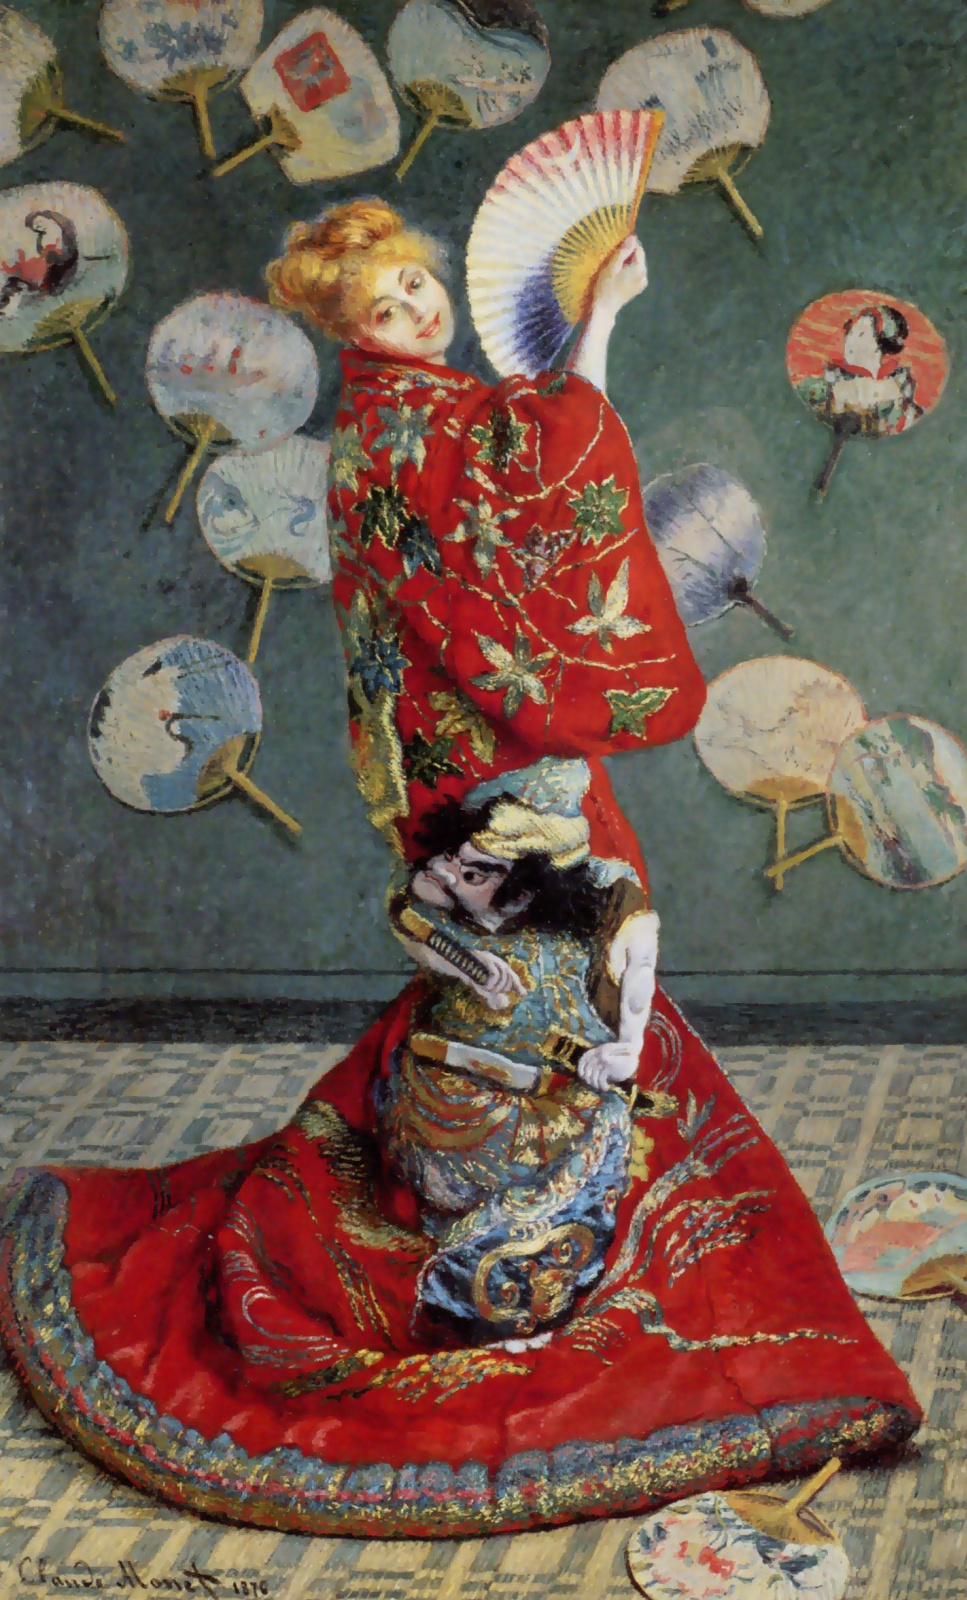 Клод Моне. La Japonaise. Камилла в японском кимоно